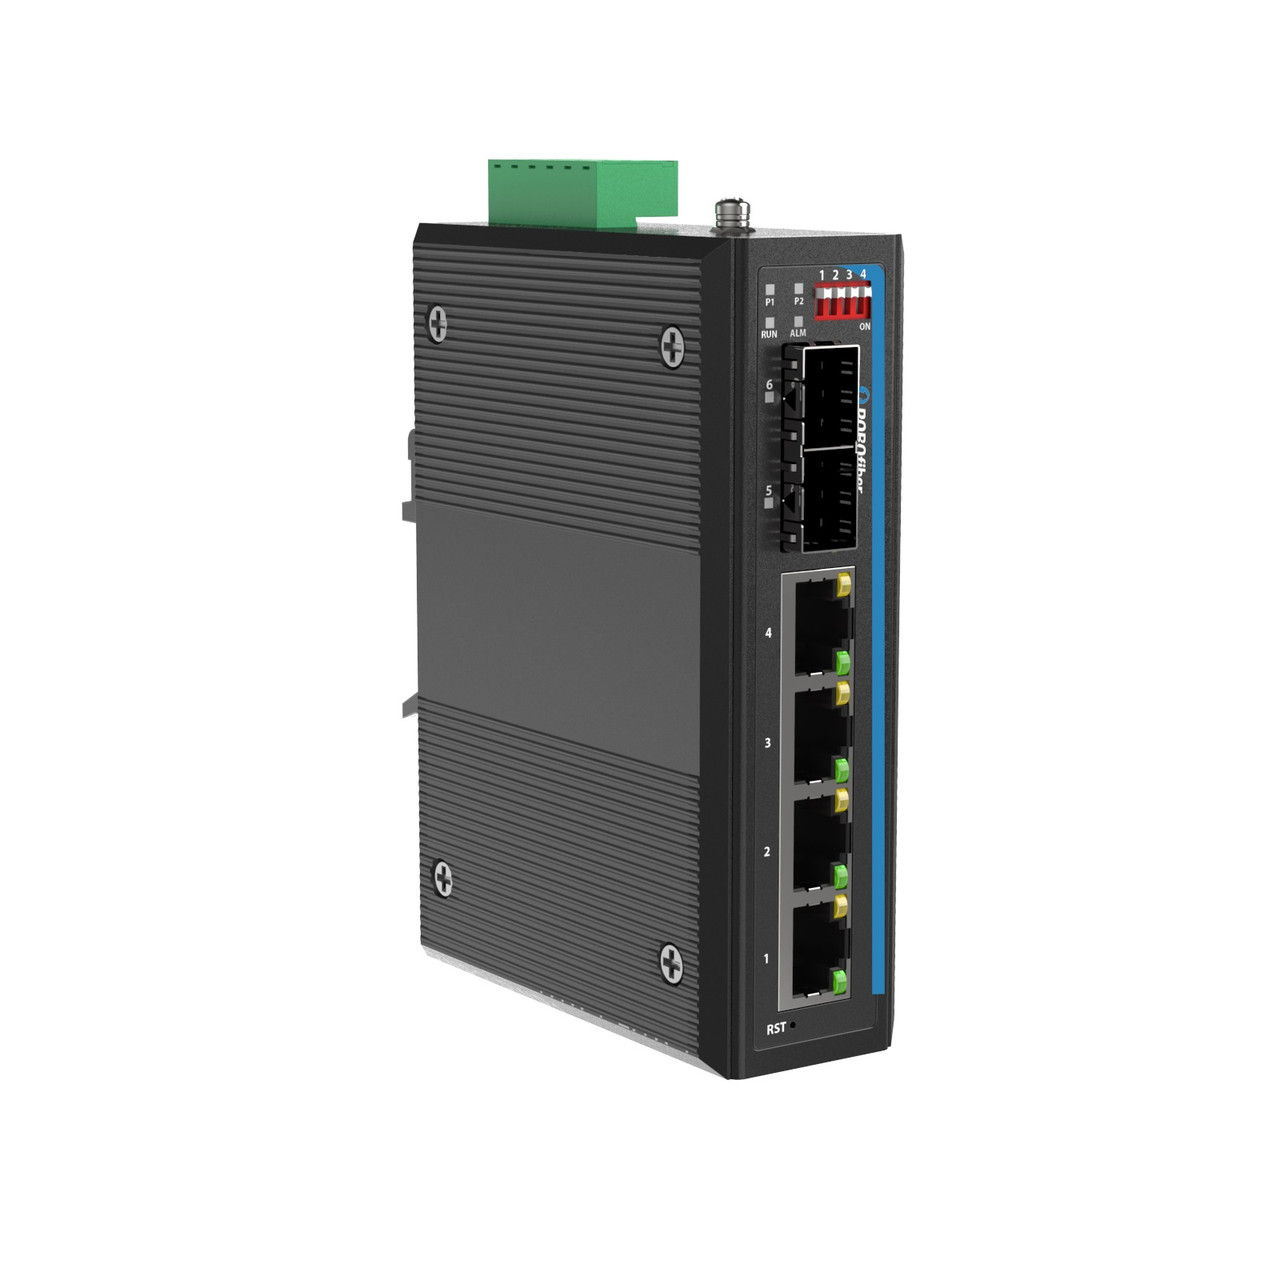 HGW-402LM-PSE - 4x RJ45 + 2x SFP ports Gigabit Ethernet Managed PoE Industrial fiber switch 120W total power, DIN rail mount, -40 to +75 Celsius